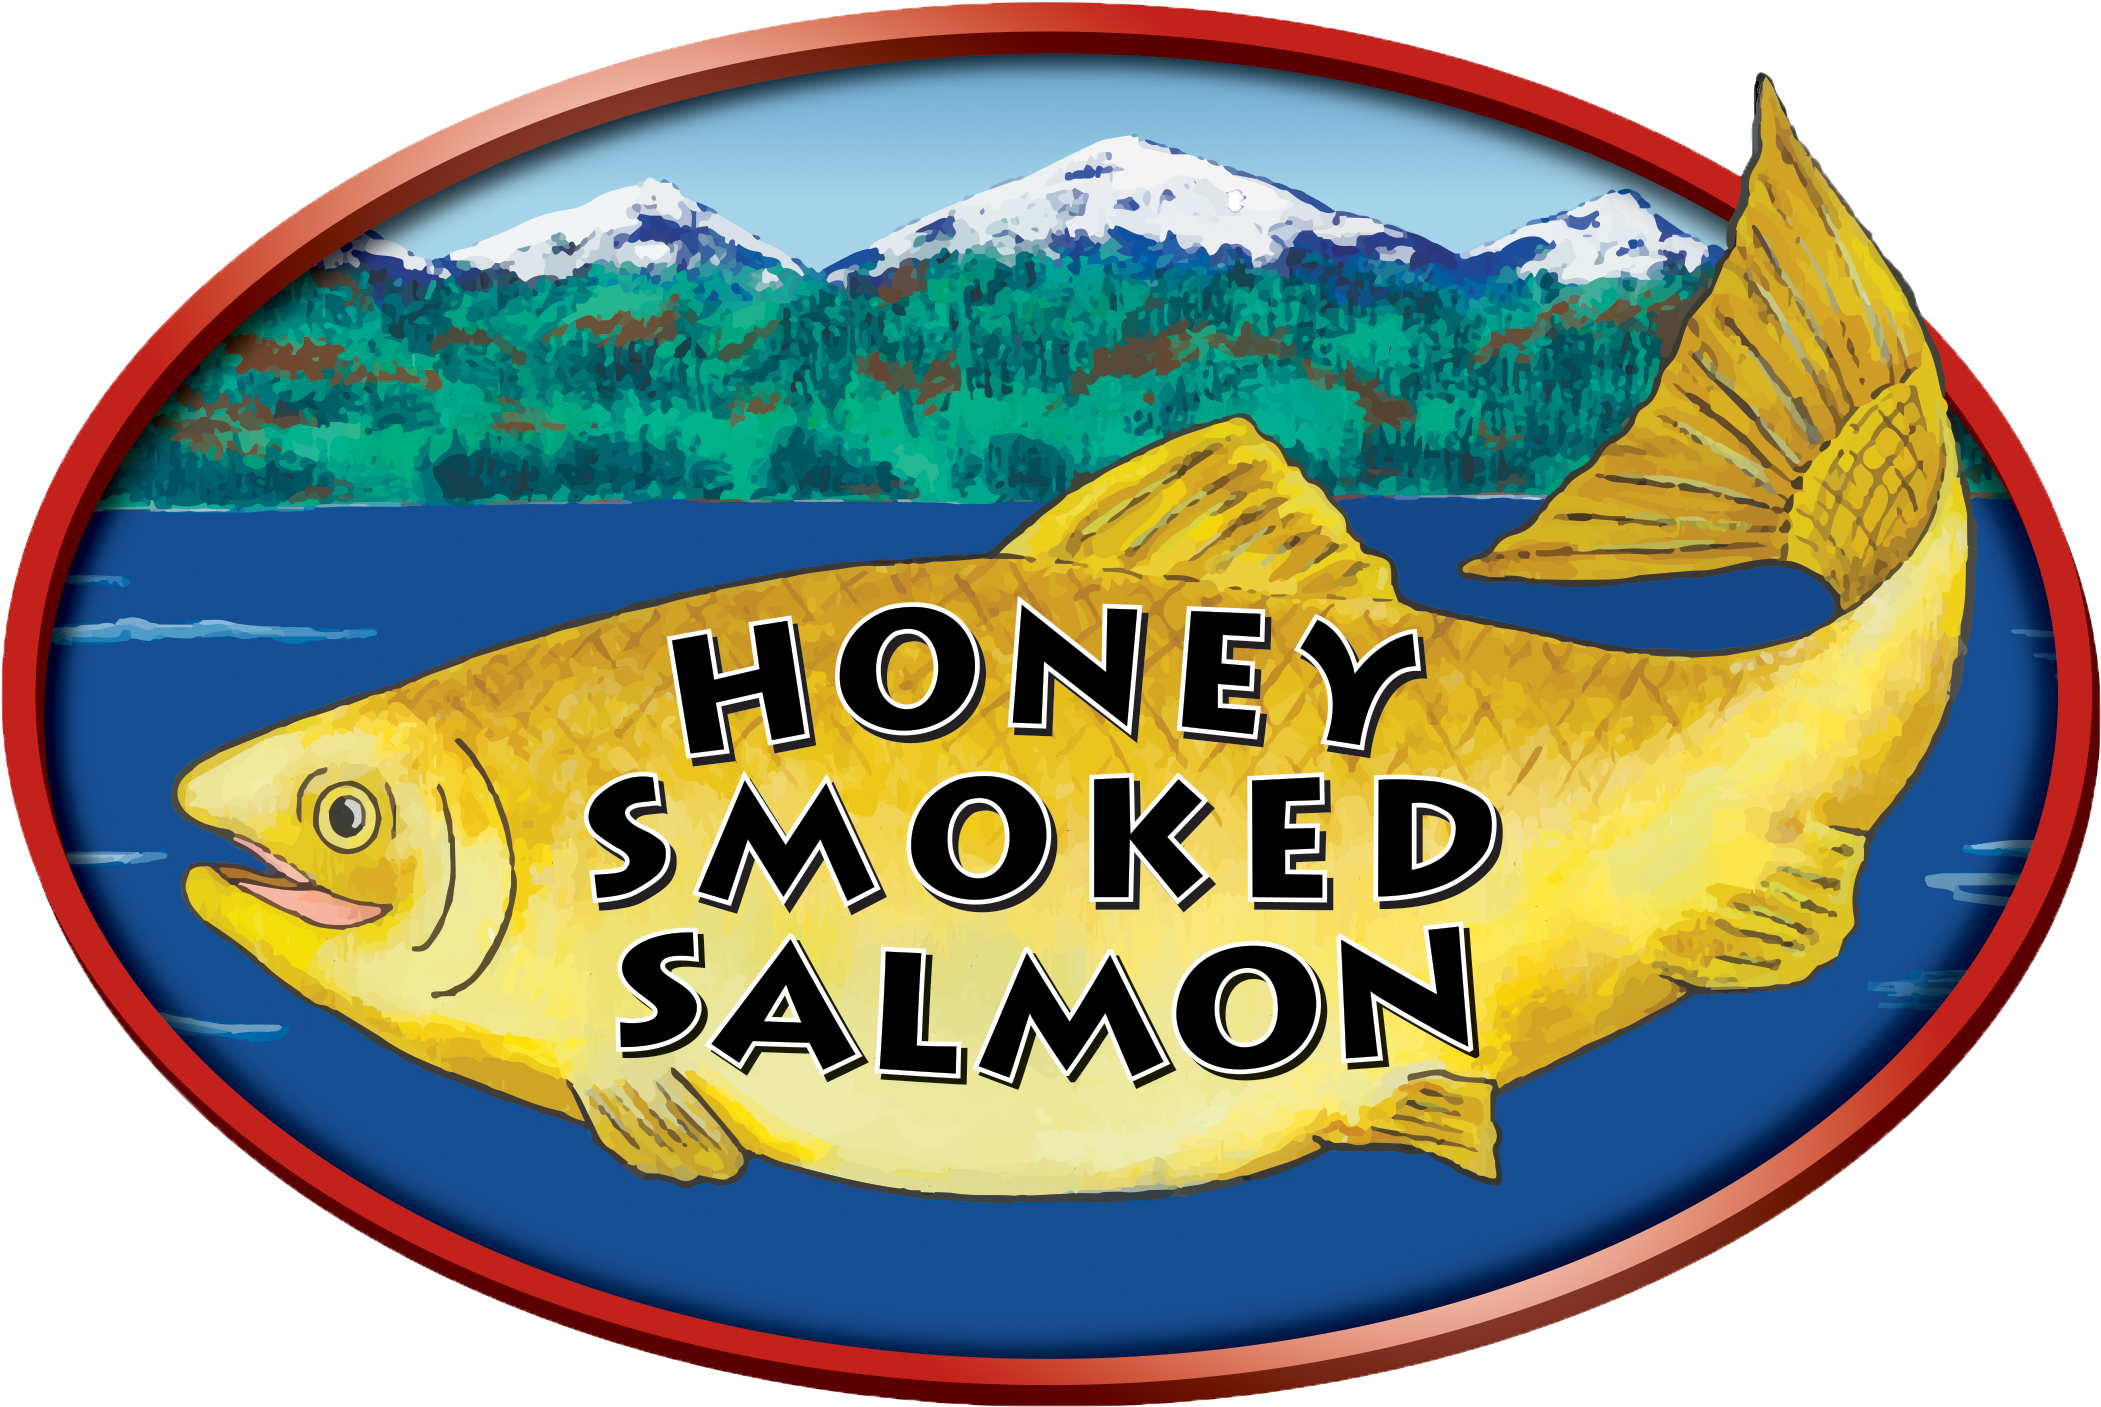 Honey Smoked Salmon Label